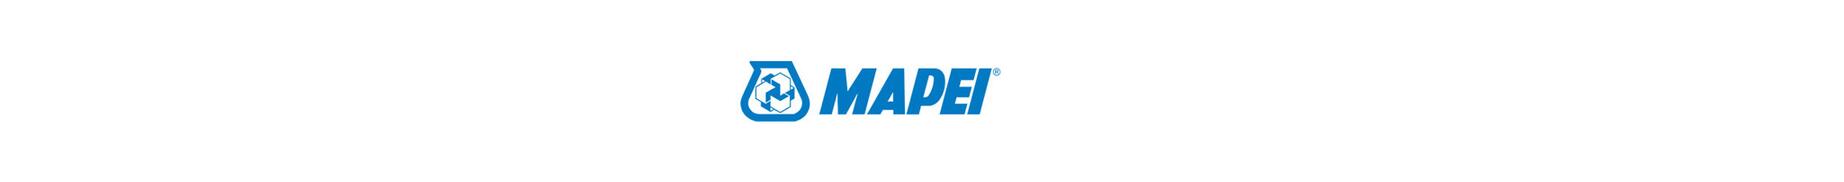 nos-fournisseurs-partenaires-Mapei-logo